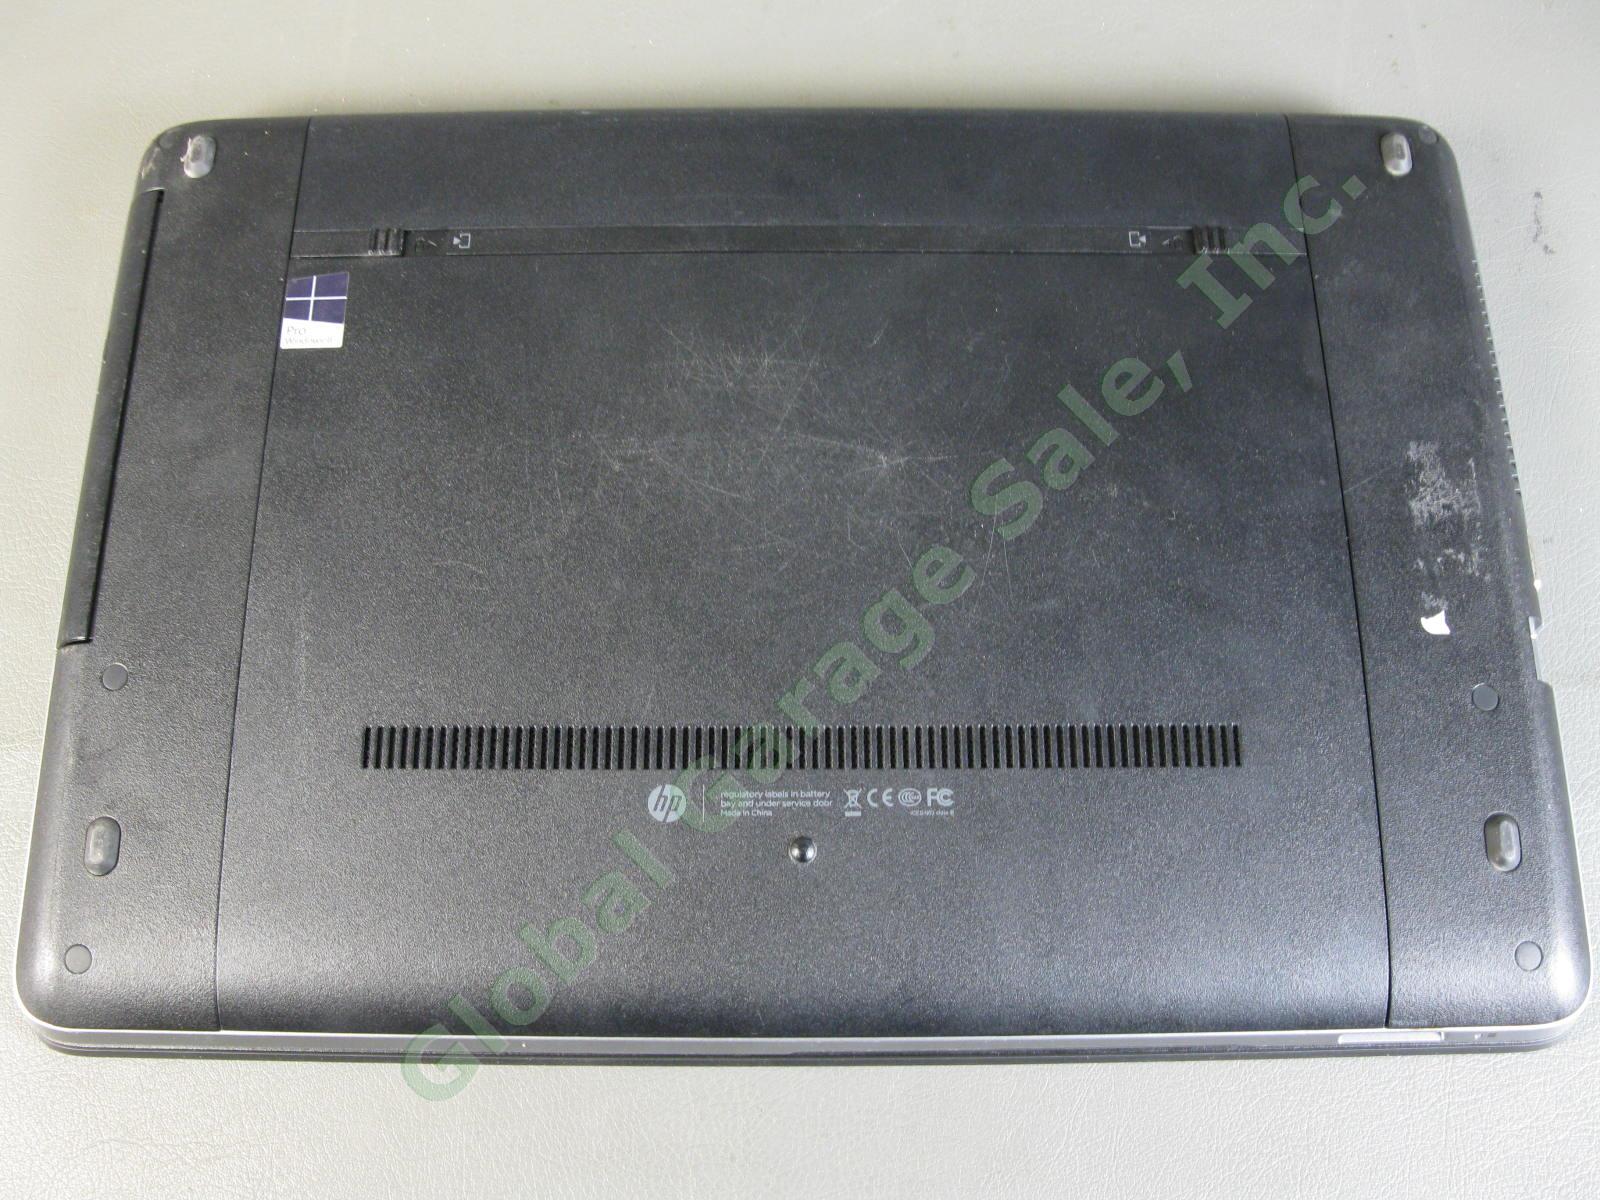 HP ProBook 450 G1 Laptop Computer i5-4200M 4GB 500GB Windows 10 WIFI DVD Webcam 7